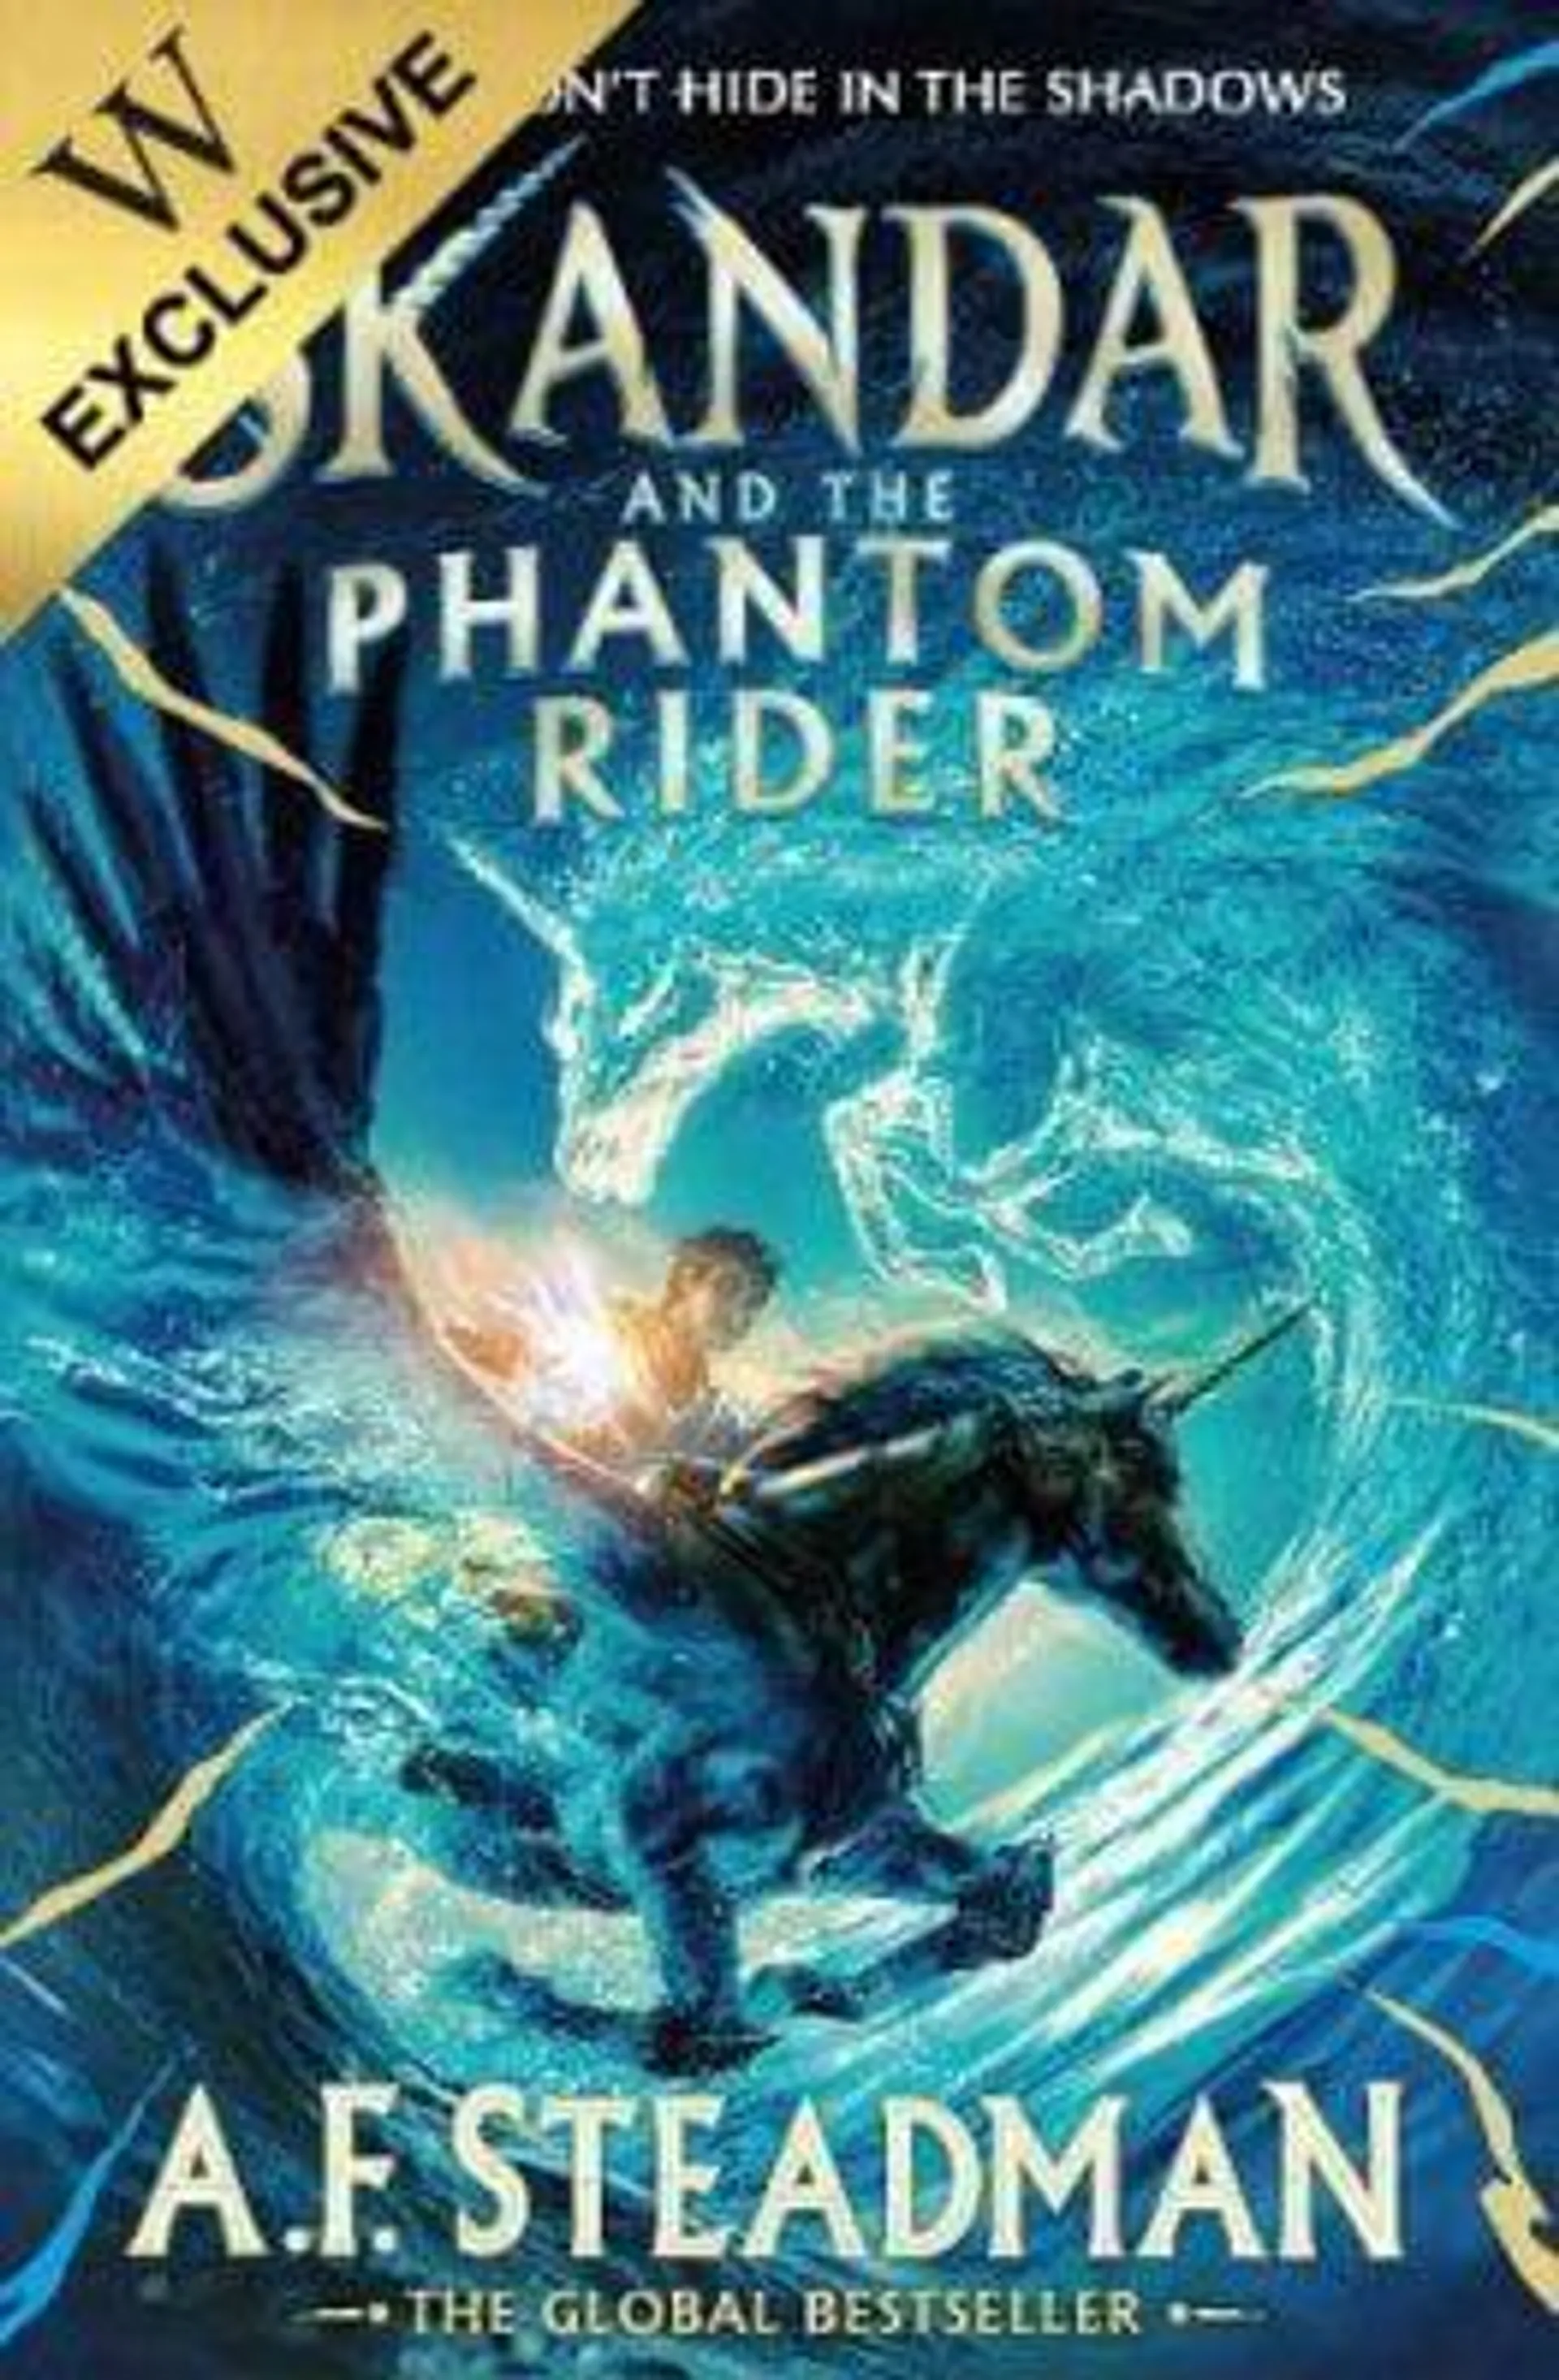 Skandar and the Phantom Rider: Exclusive Edition (Paperback)